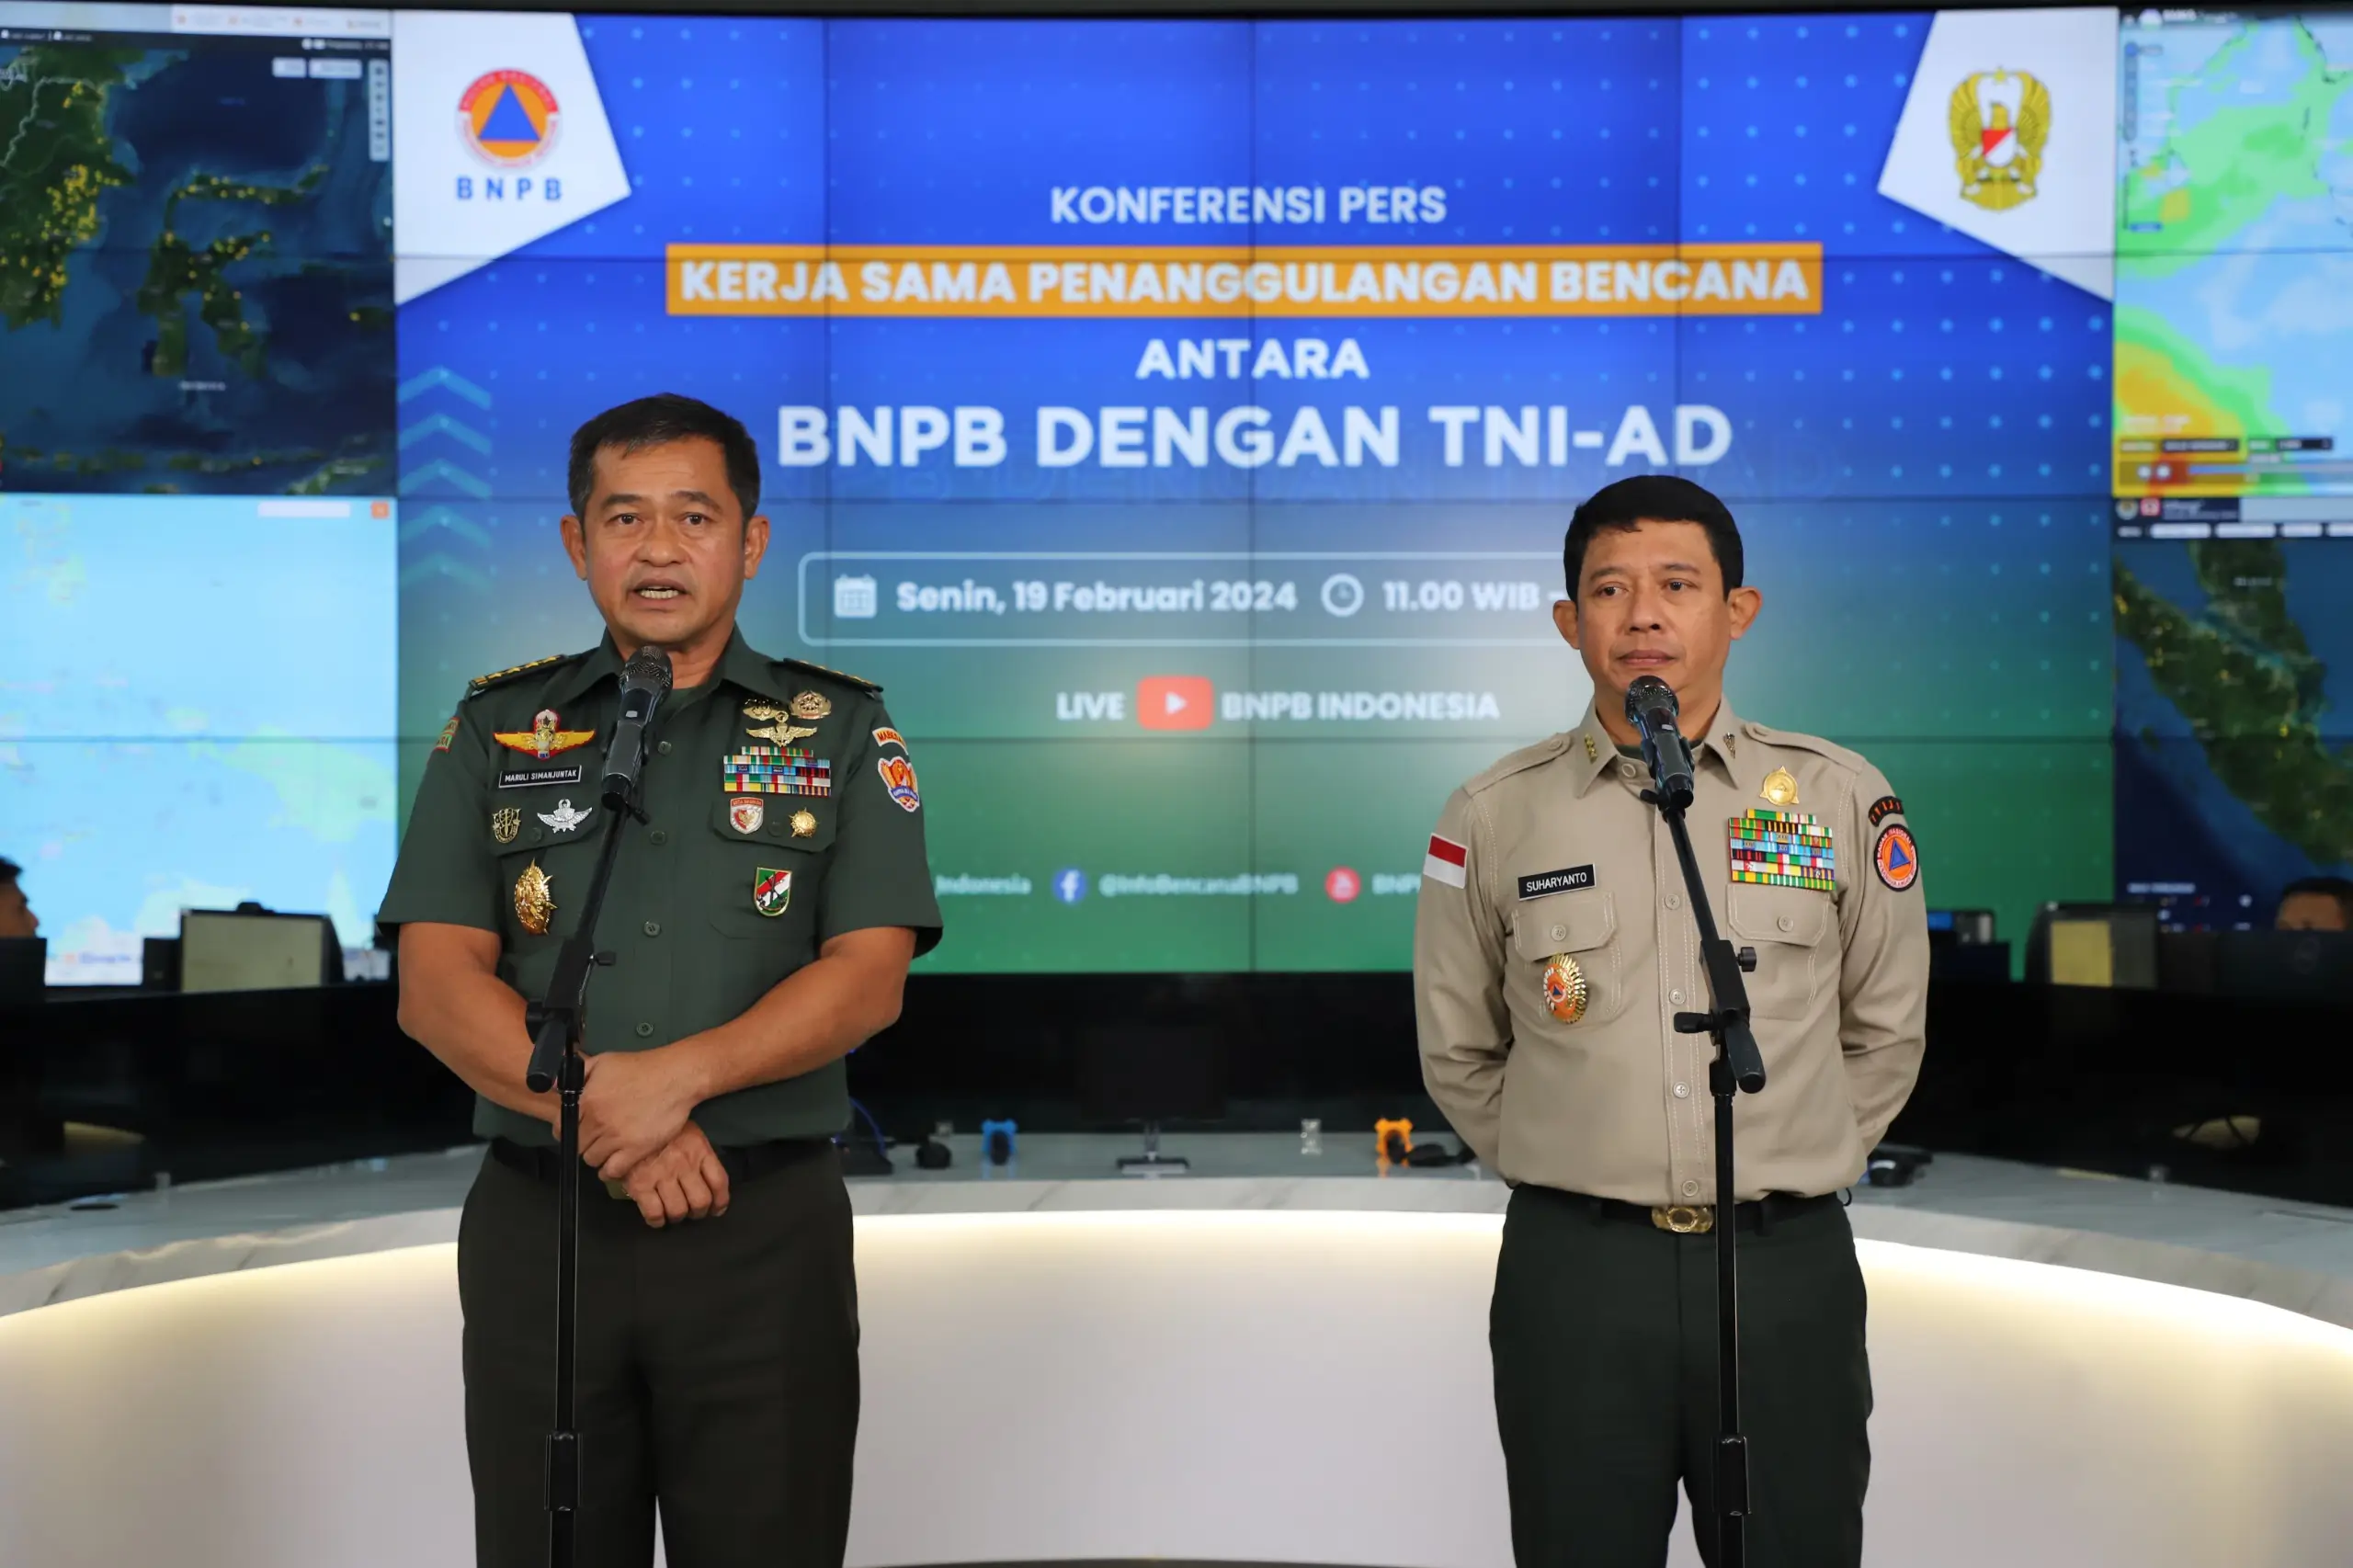 Melalui penandatanganan kerja sama hari ini, kedepannya BNPB bersama dengan TNI AD akan meningkatkan penguatan upaya-upaya penanggulangan bencana di Indonesia. 